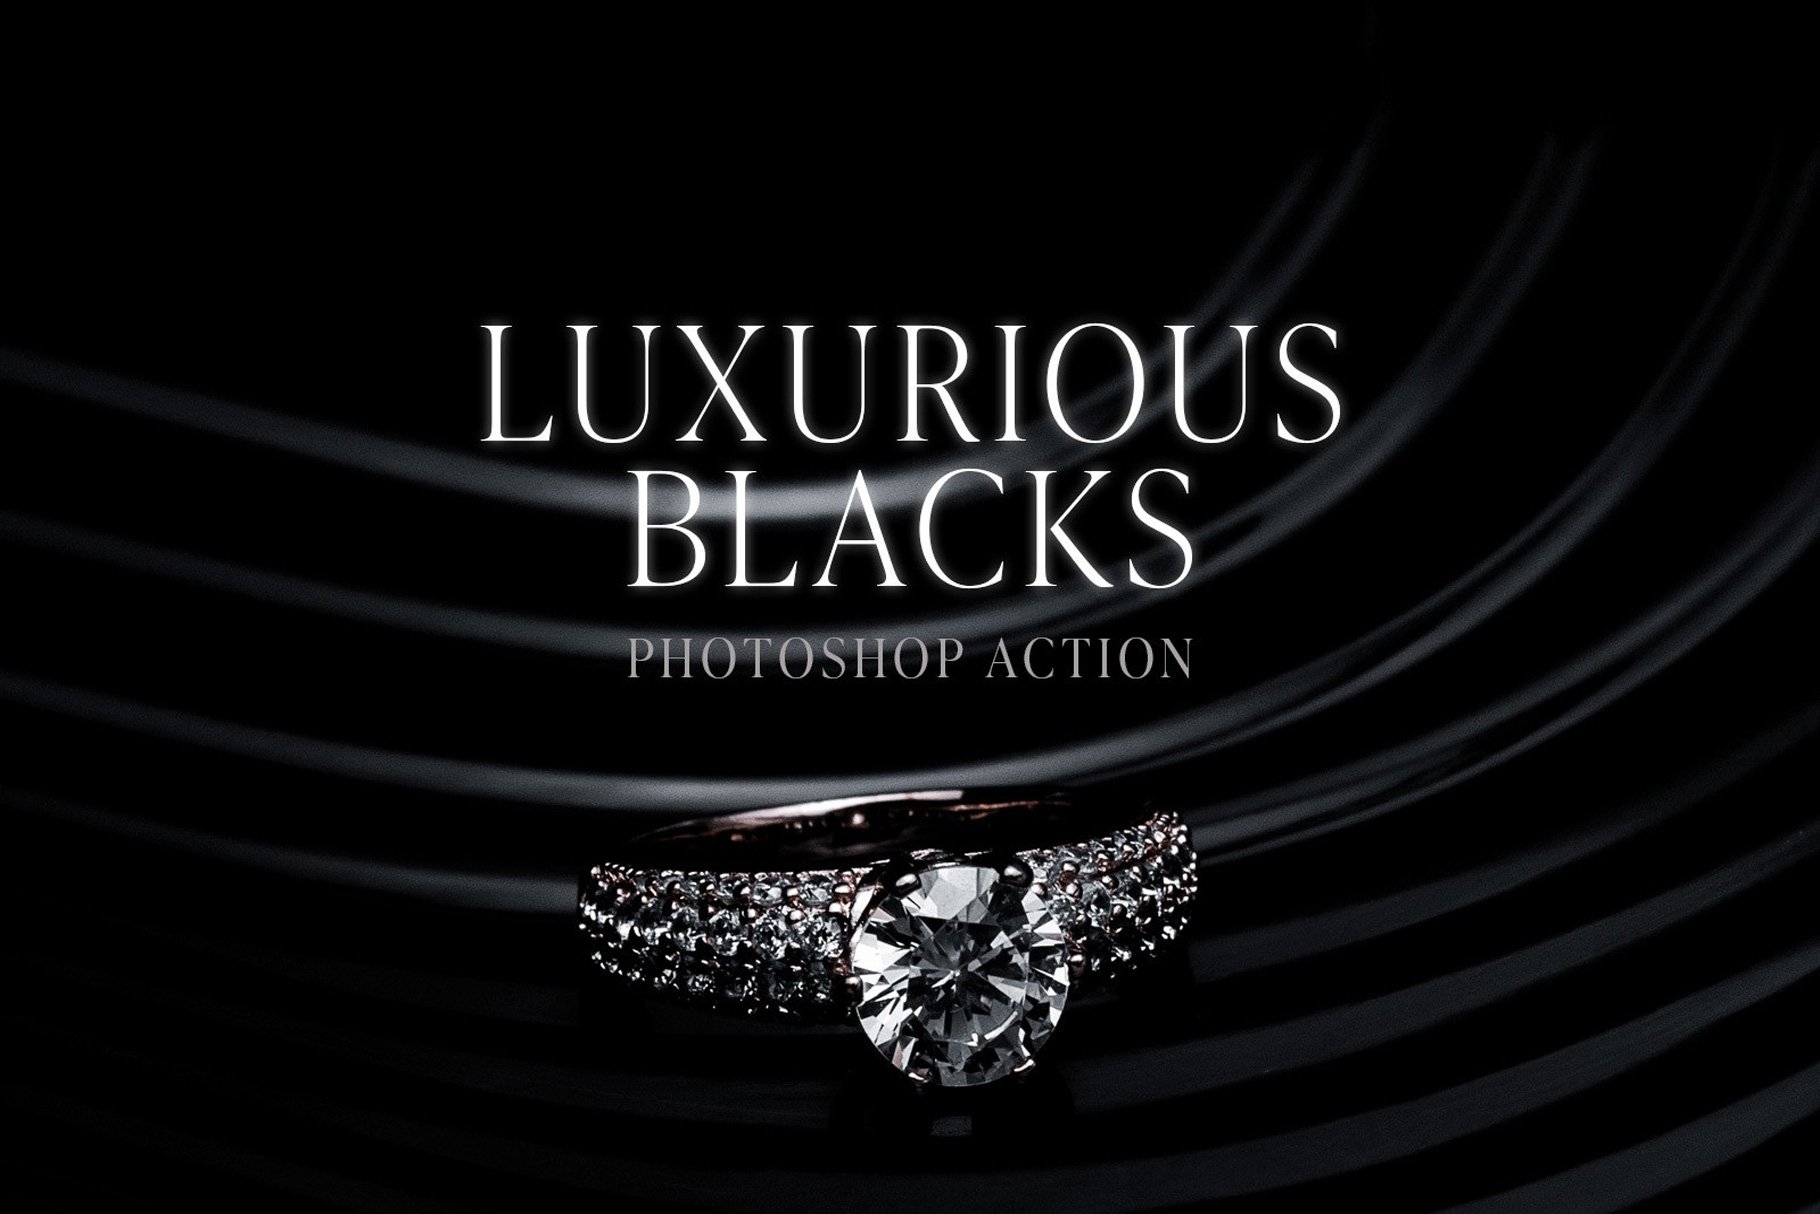 Luxurious Blacks Photoshop Actioncover image.